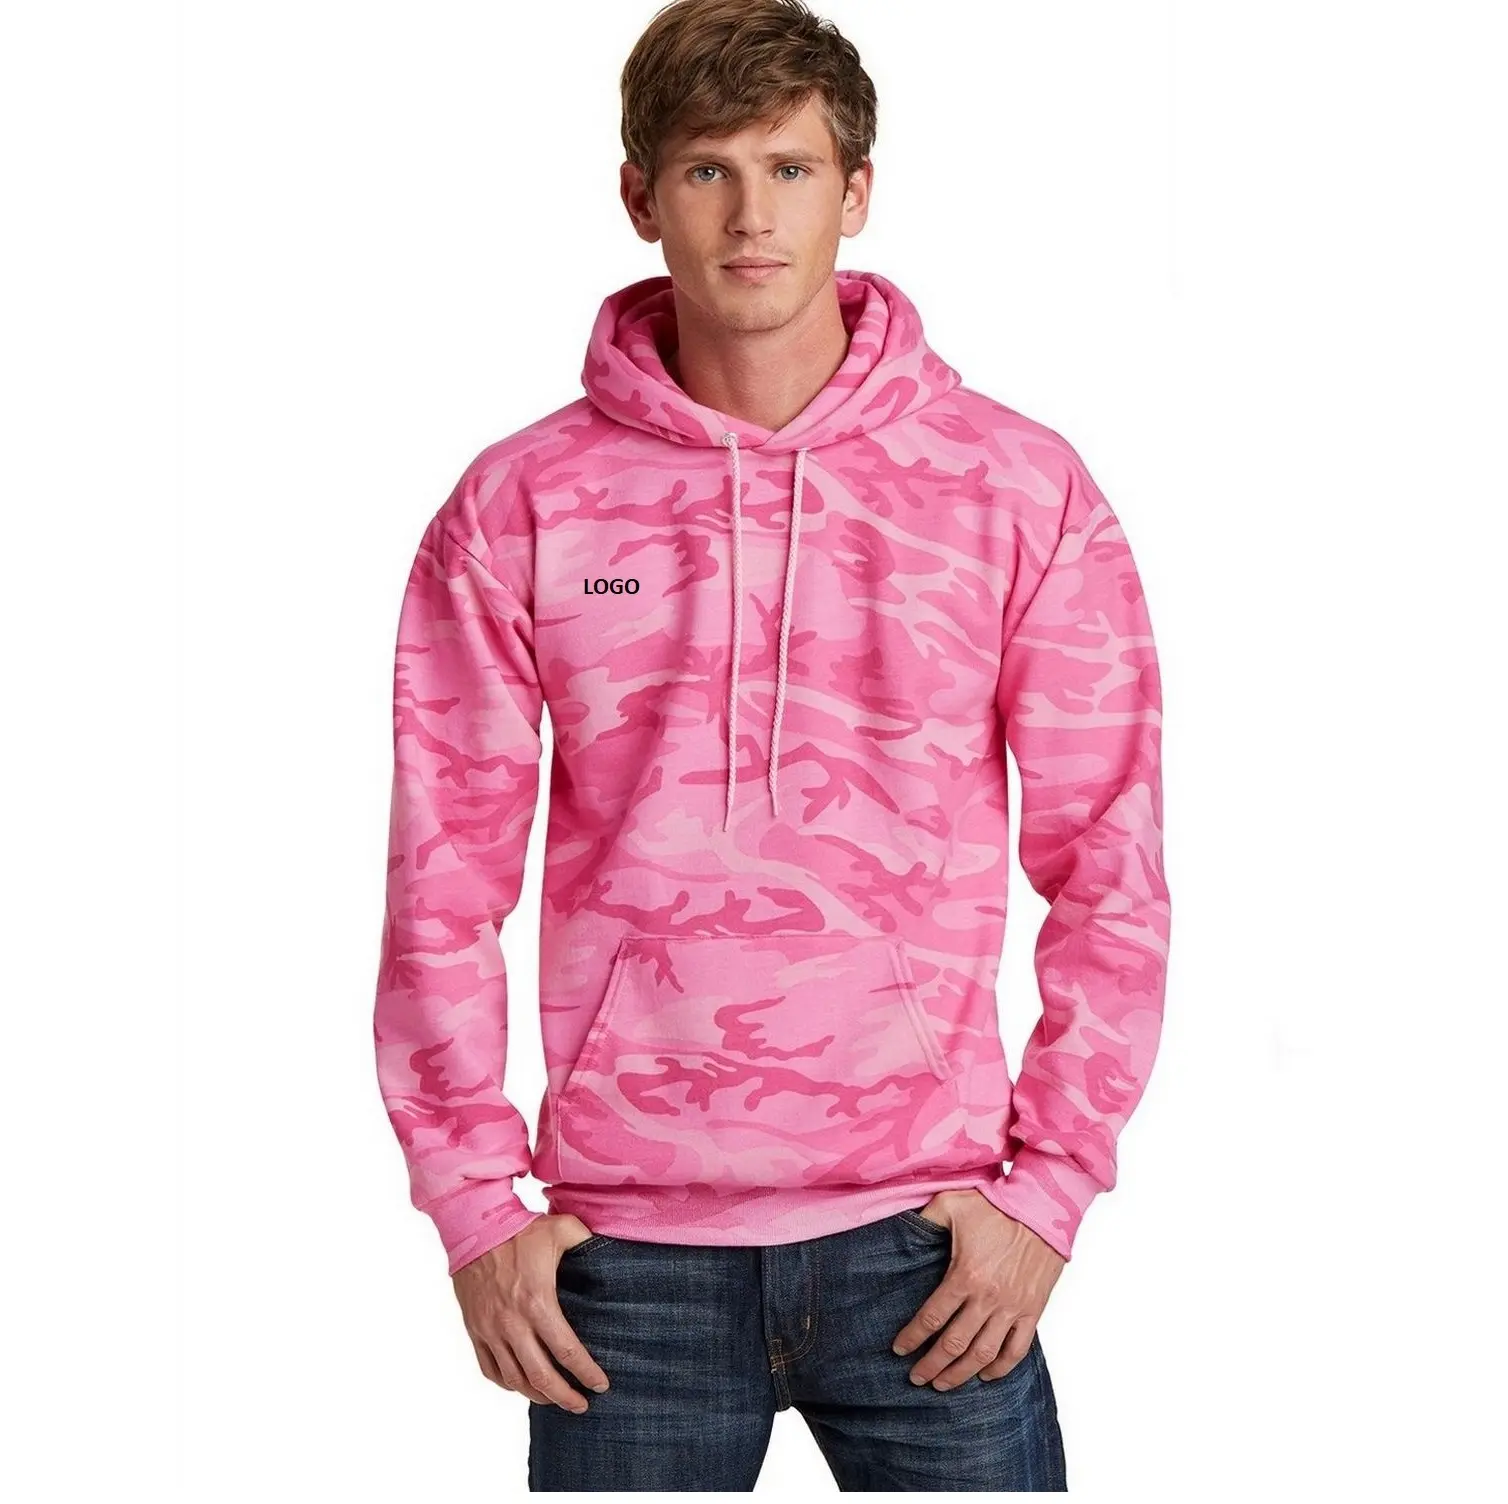 Herren Luxusmode Streetwear Kleidung individuelle rosa Tarnung bedruckte Hoodies für Herren Unisex Vintage Waschbaumwolle Fleece Hoodies